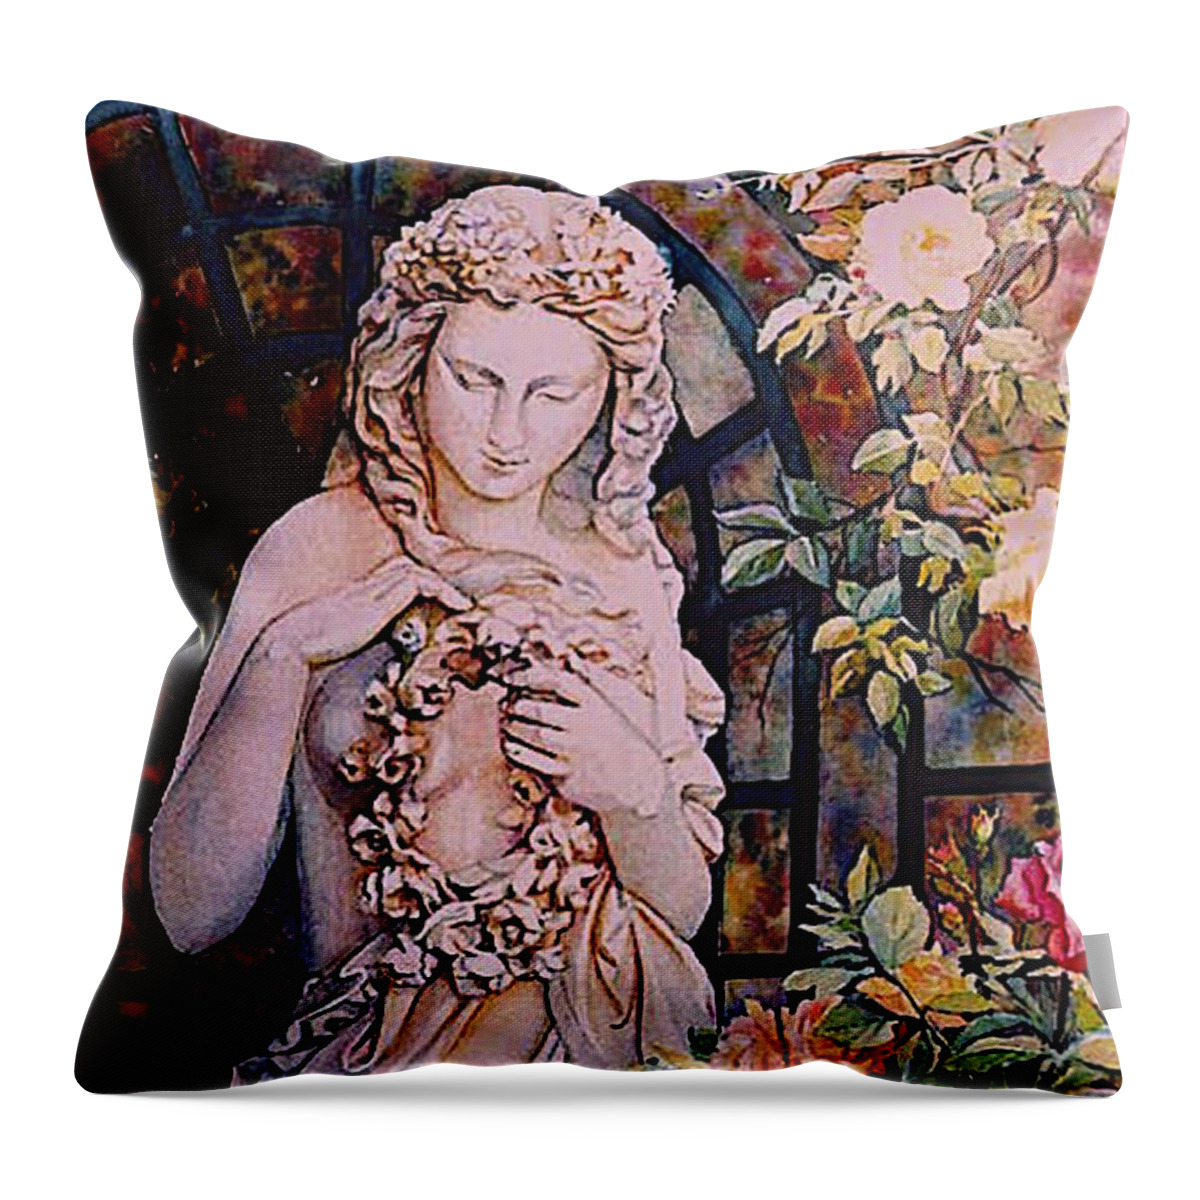 Paris Throw Pillow featuring the painting Jardin Secret - Paris - France by Francoise Chauray